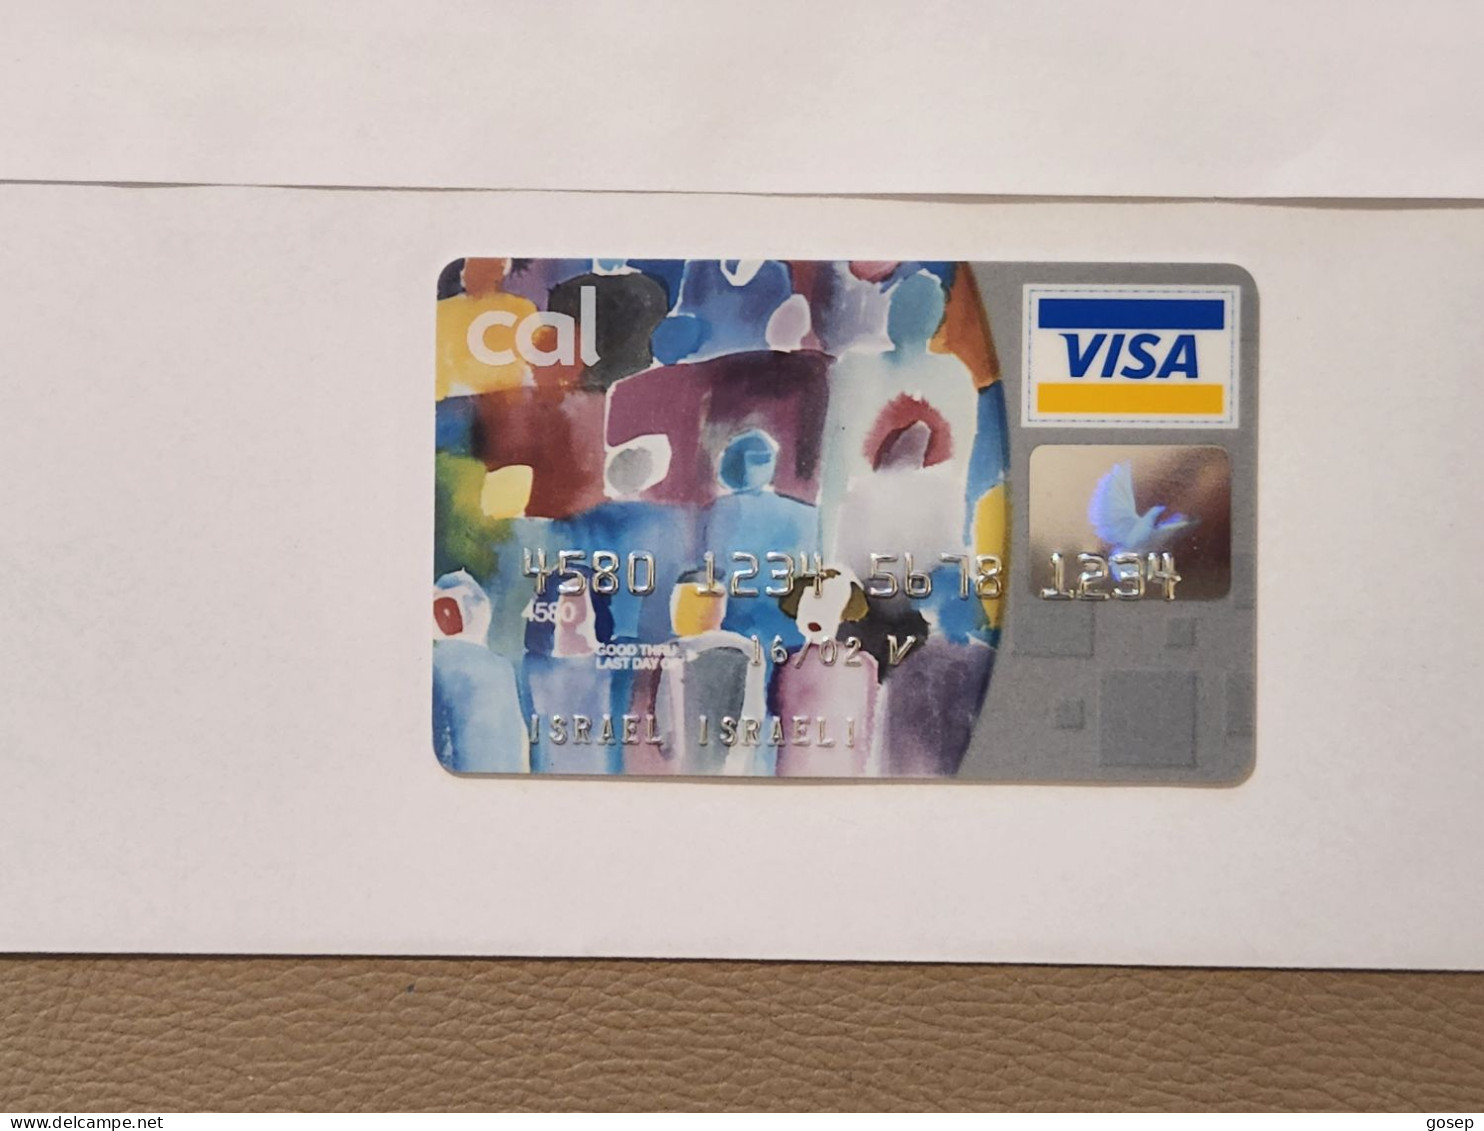 ISRAEL-CALL VISA ELECTRON-(4580-1234-5678-1234)(A Special Rare Experimental Card)-(N)-(16.01.02)-Good Card - Tarjetas De Crédito (caducidad Min 10 Años)